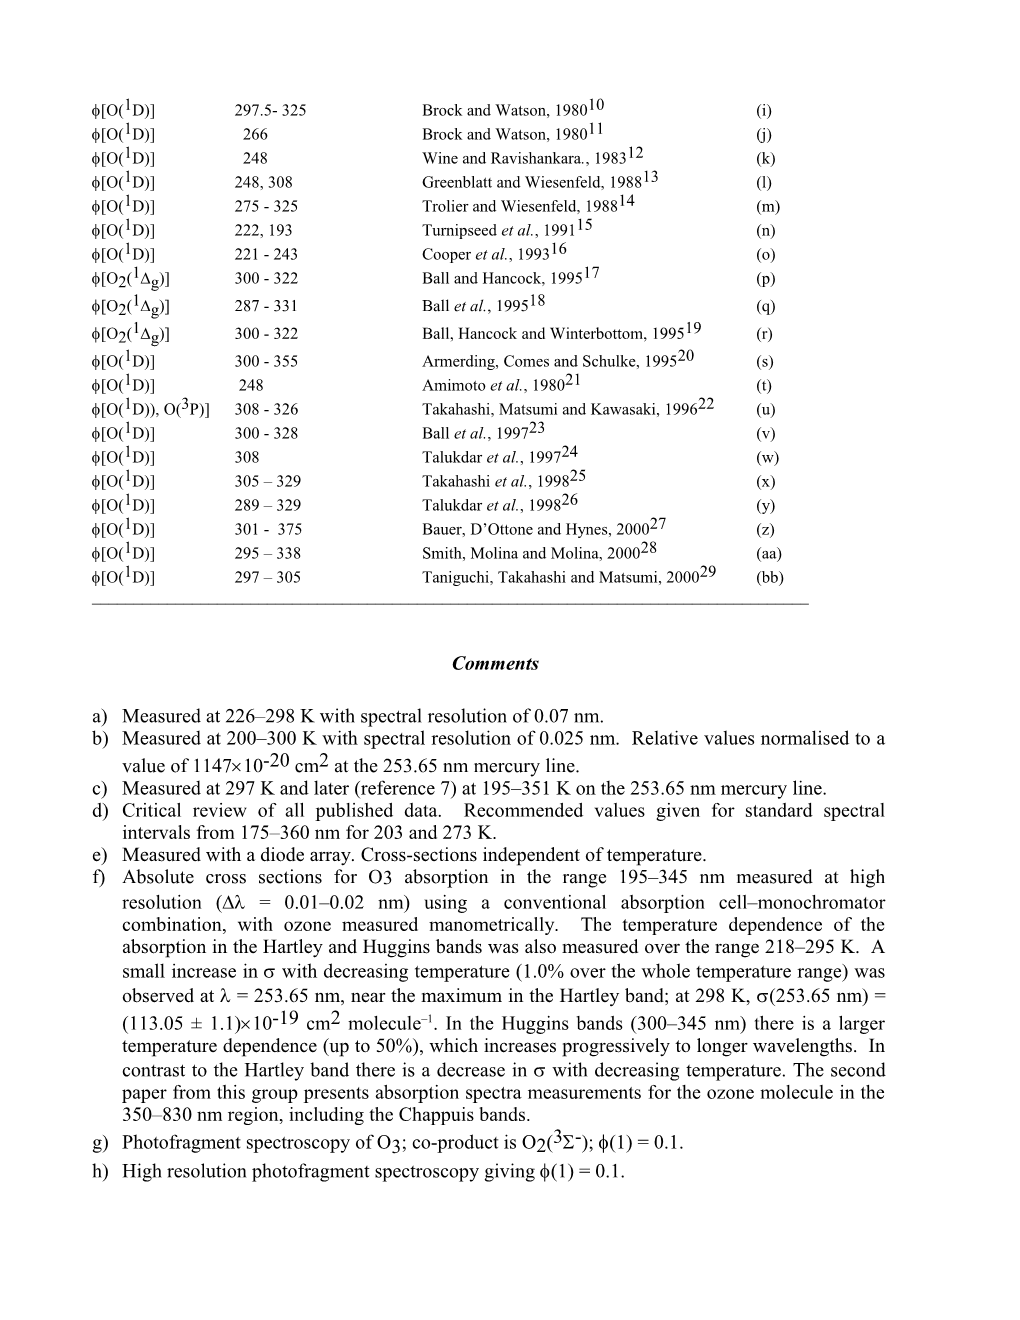 IUPAC Task Group on Atmospheric Chemical Kinetic Data Evaluation Data Sheet Pox2